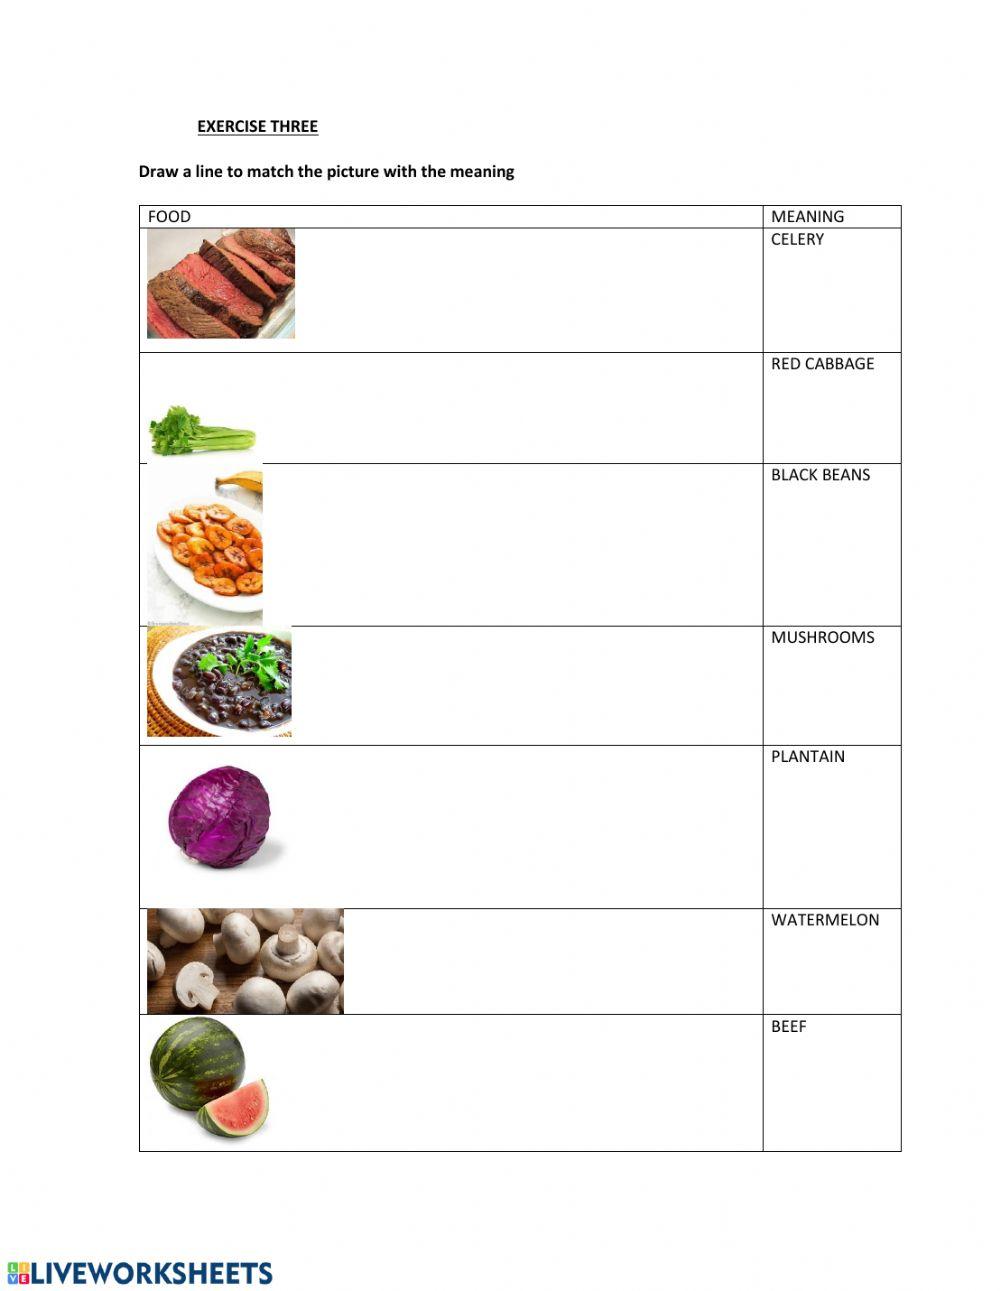 Categories of food